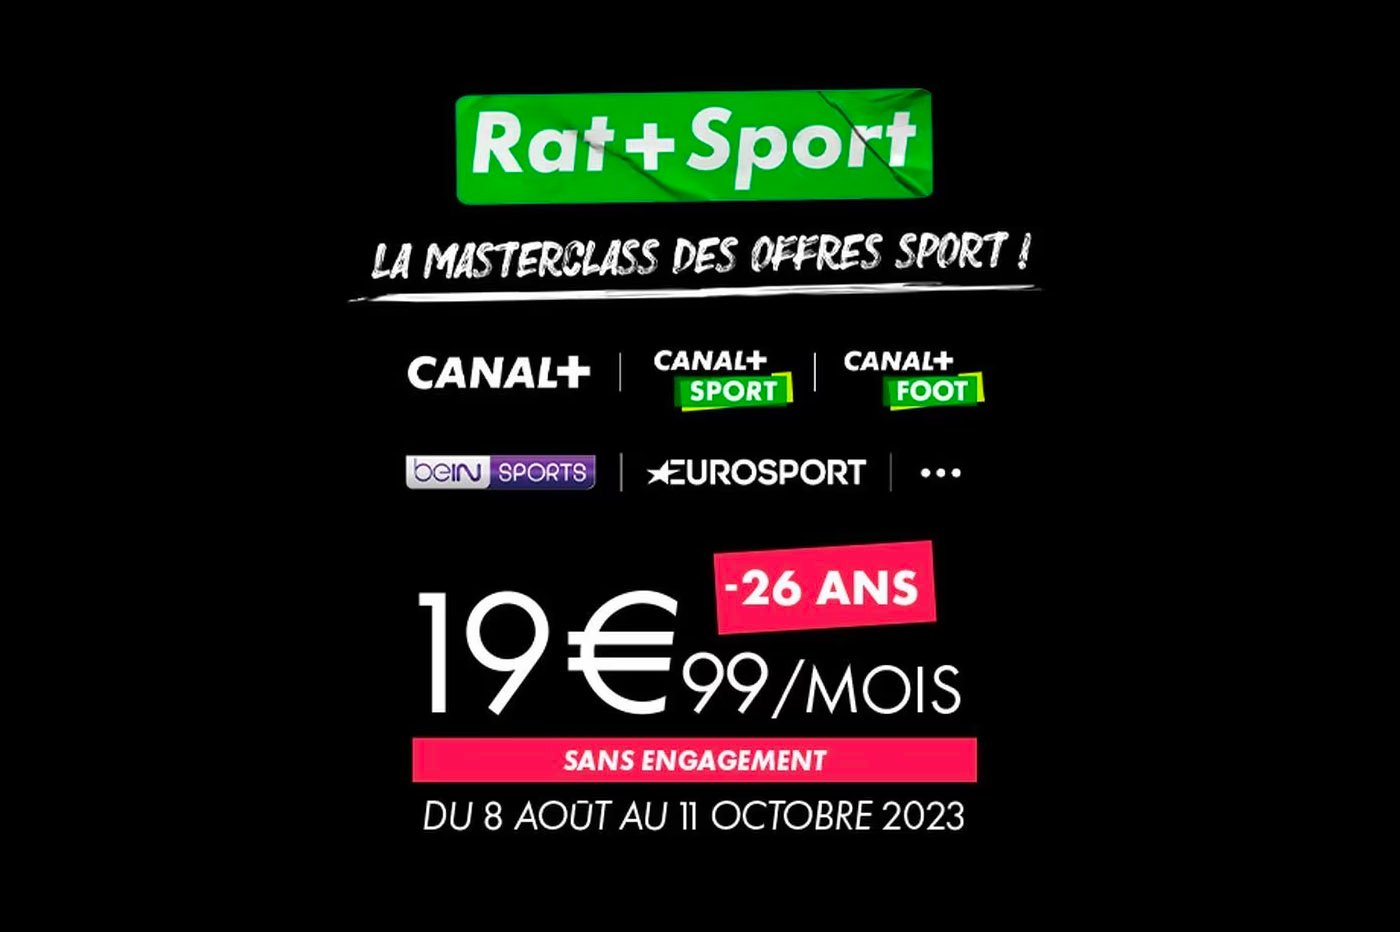 Canal+ Rat+ Sport